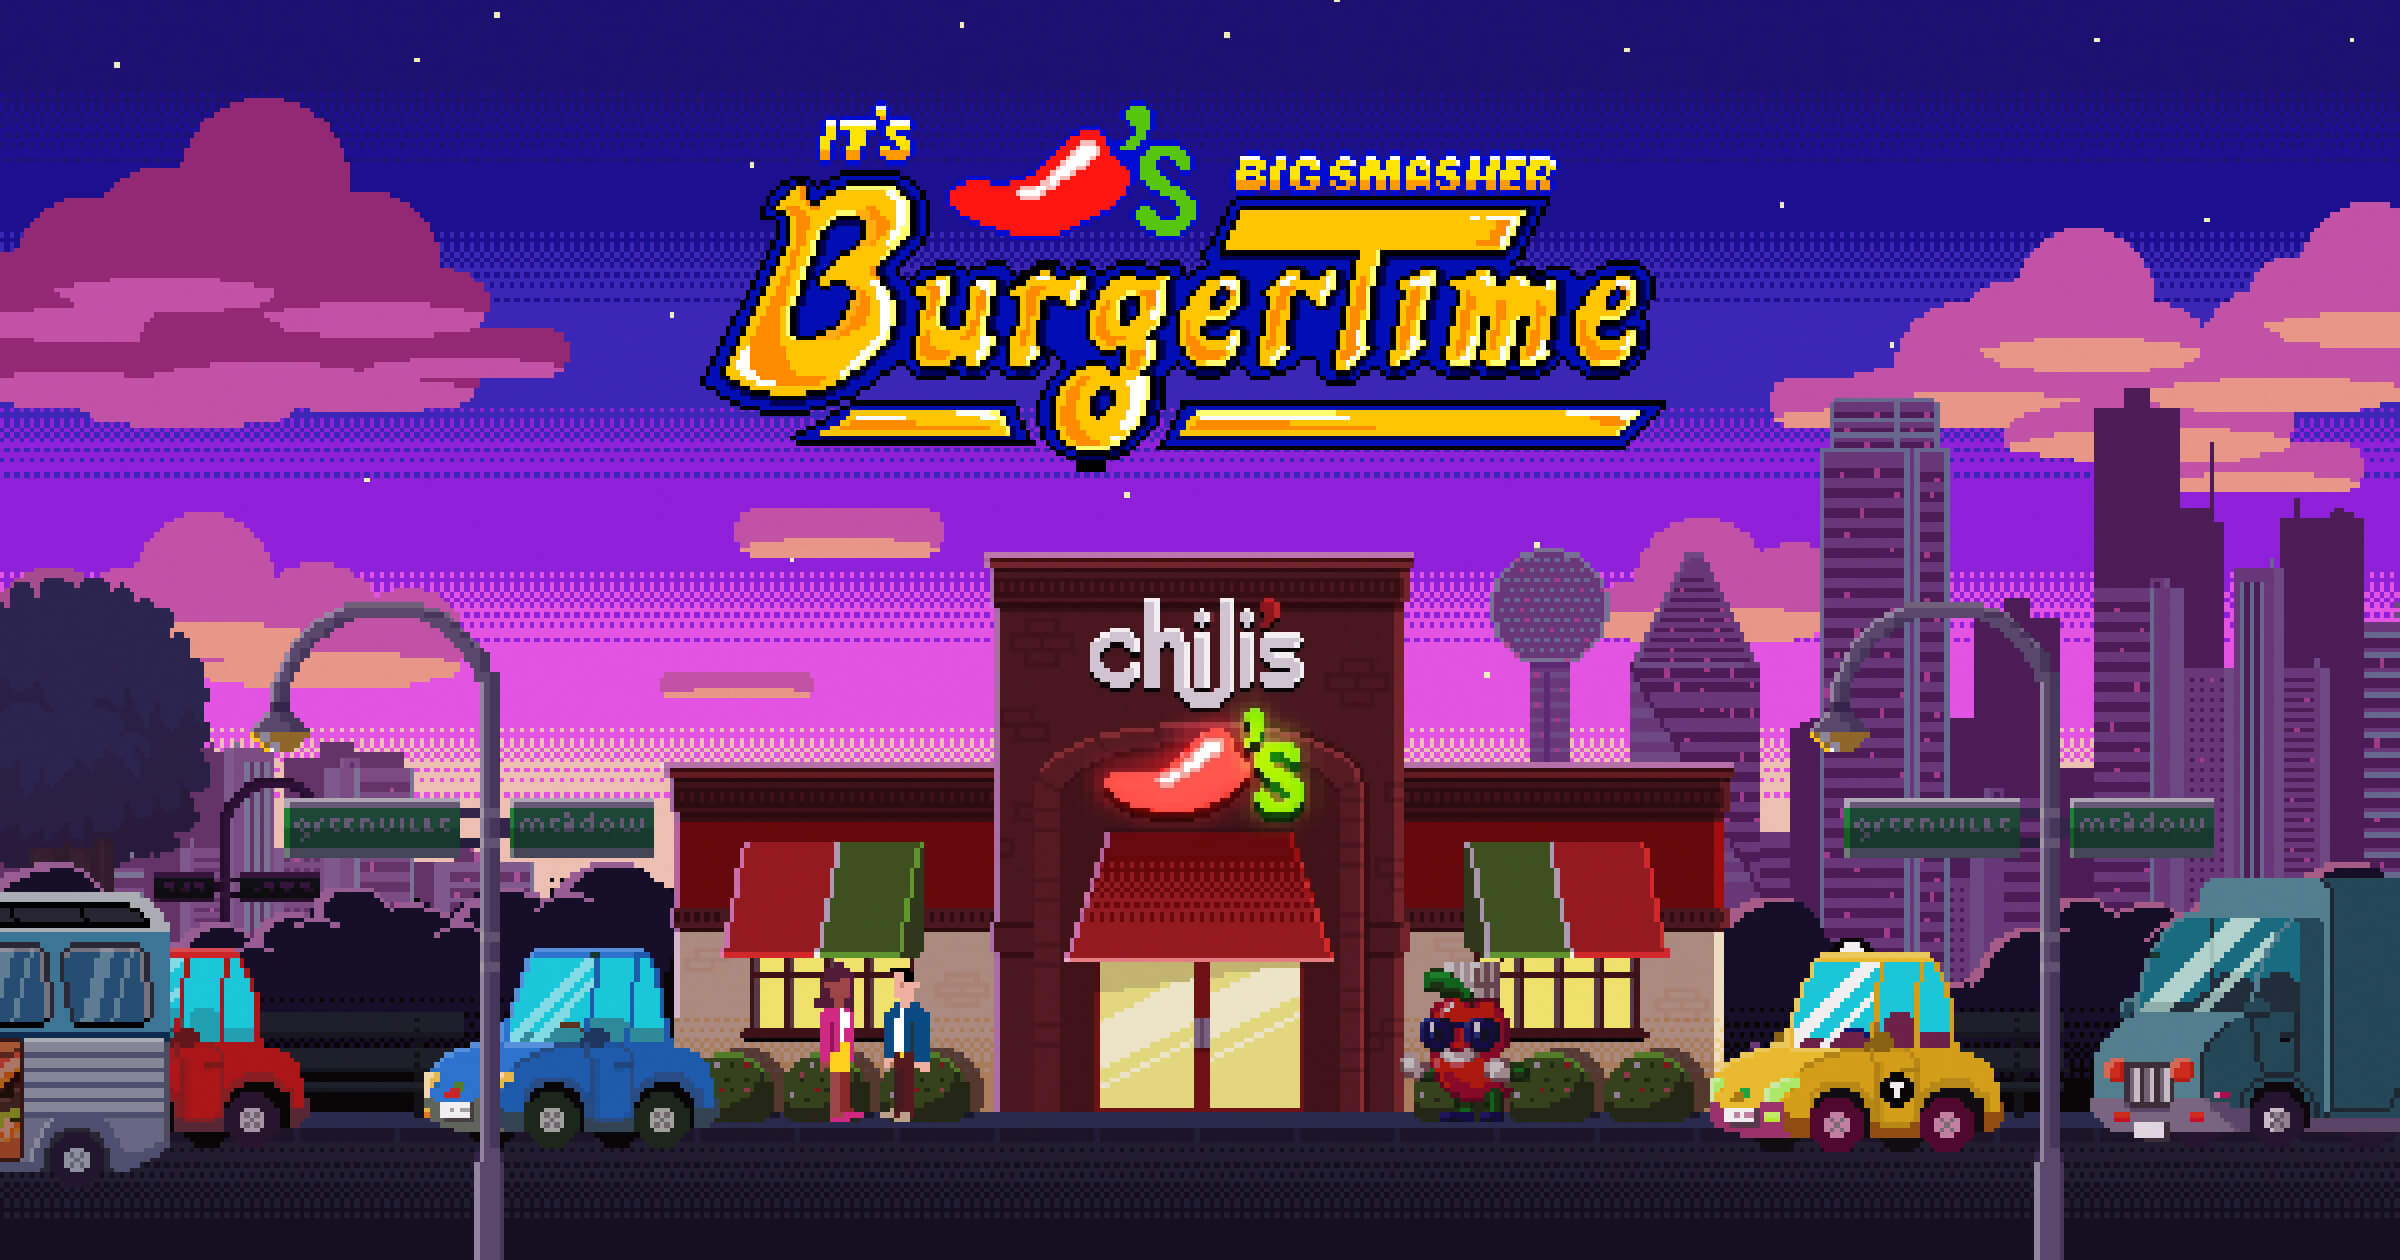 chilisburgertime.com